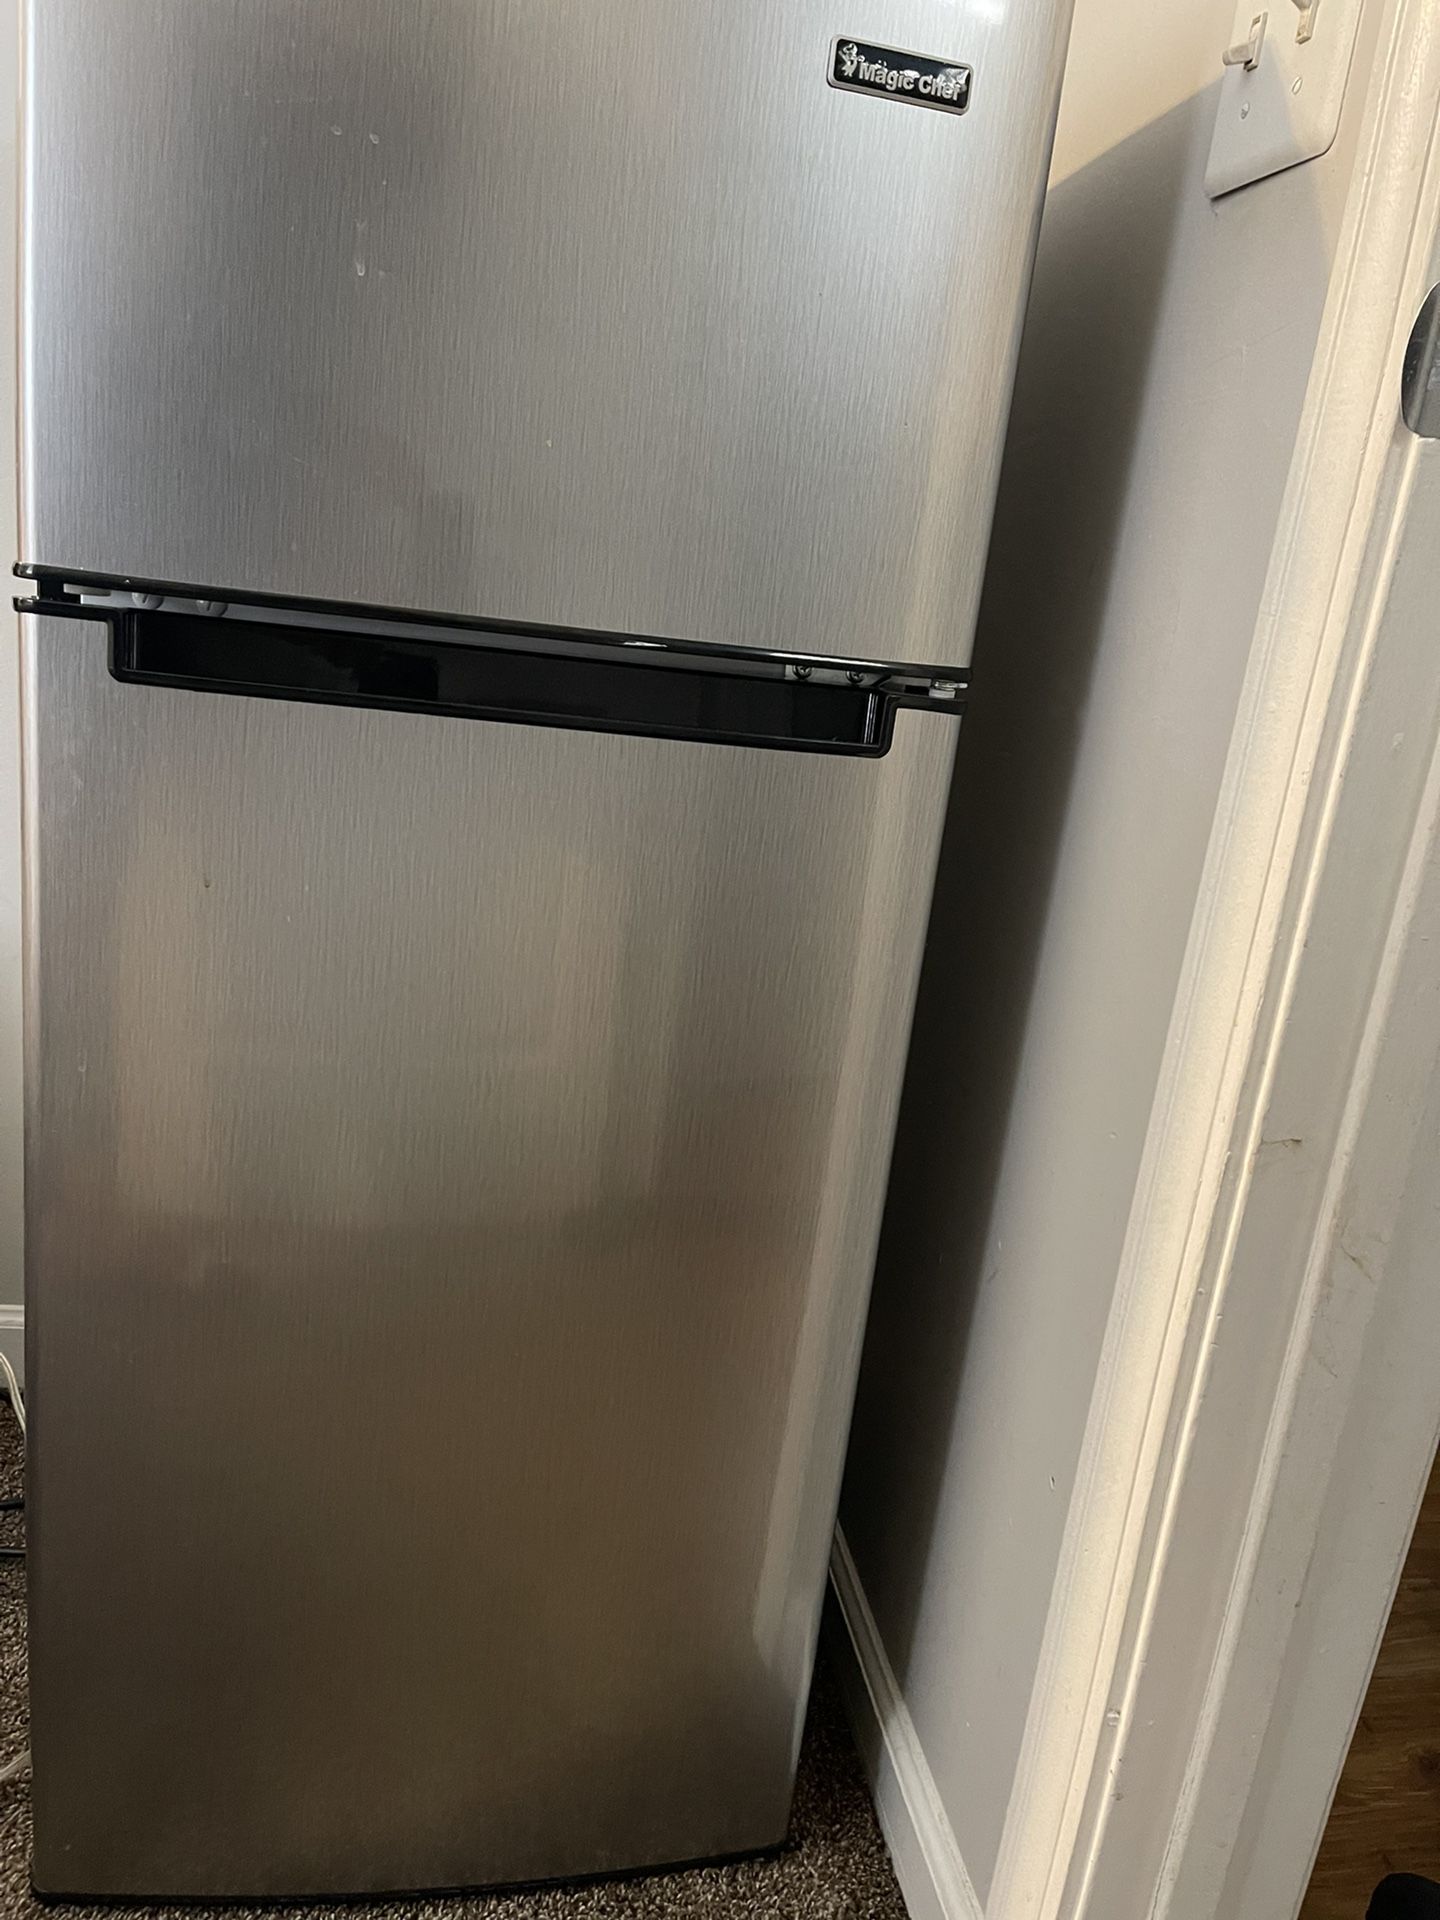 Magic Chef Mini Refrigerator 4.5 Cubic Ft